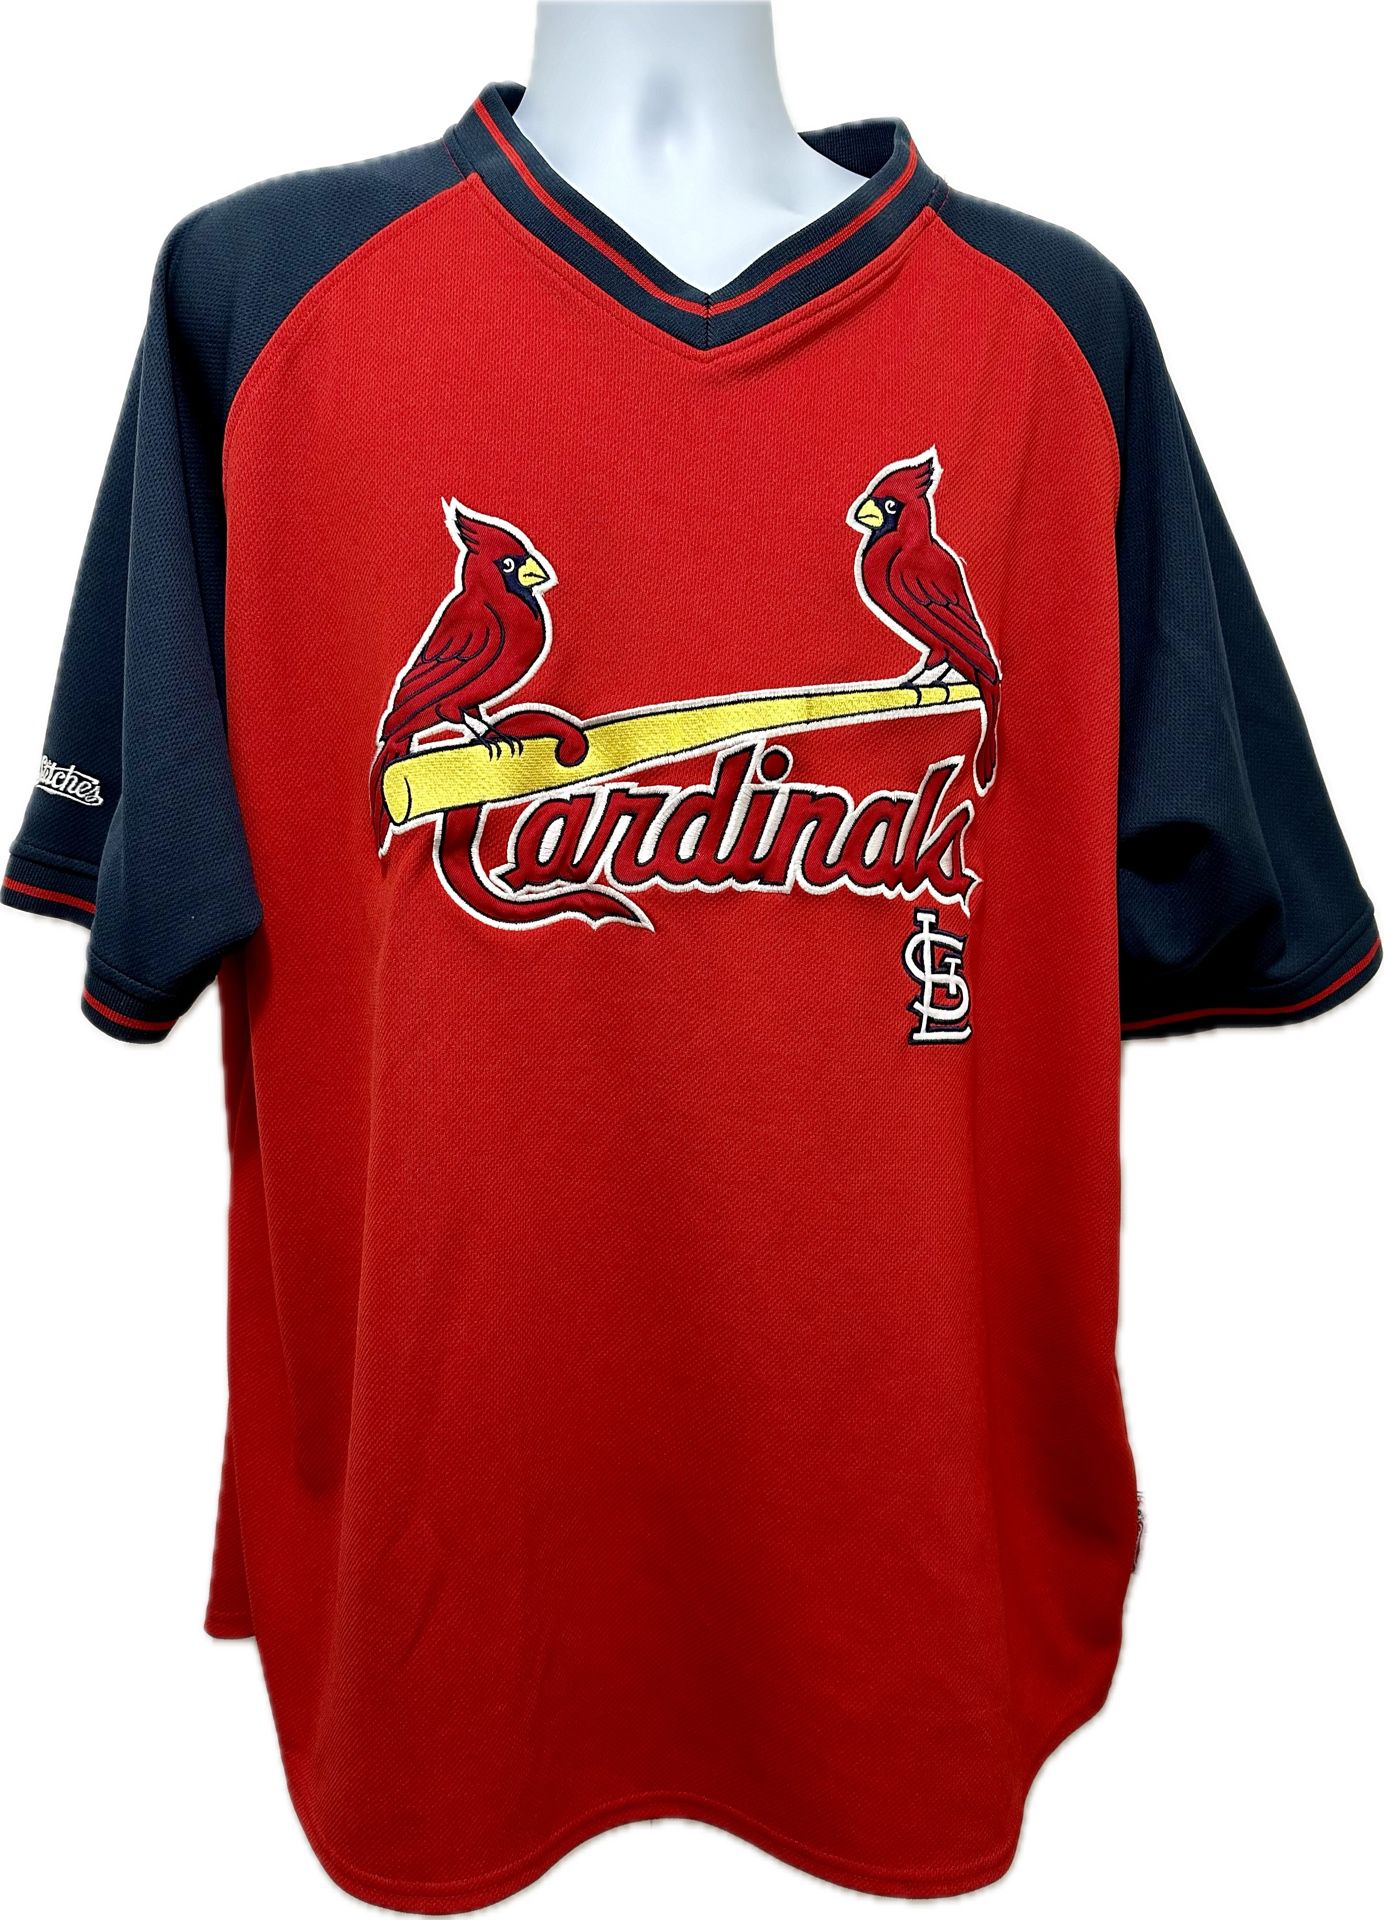 St. Louis Cardinals Stitches Brand Jersey Sizes 2XL